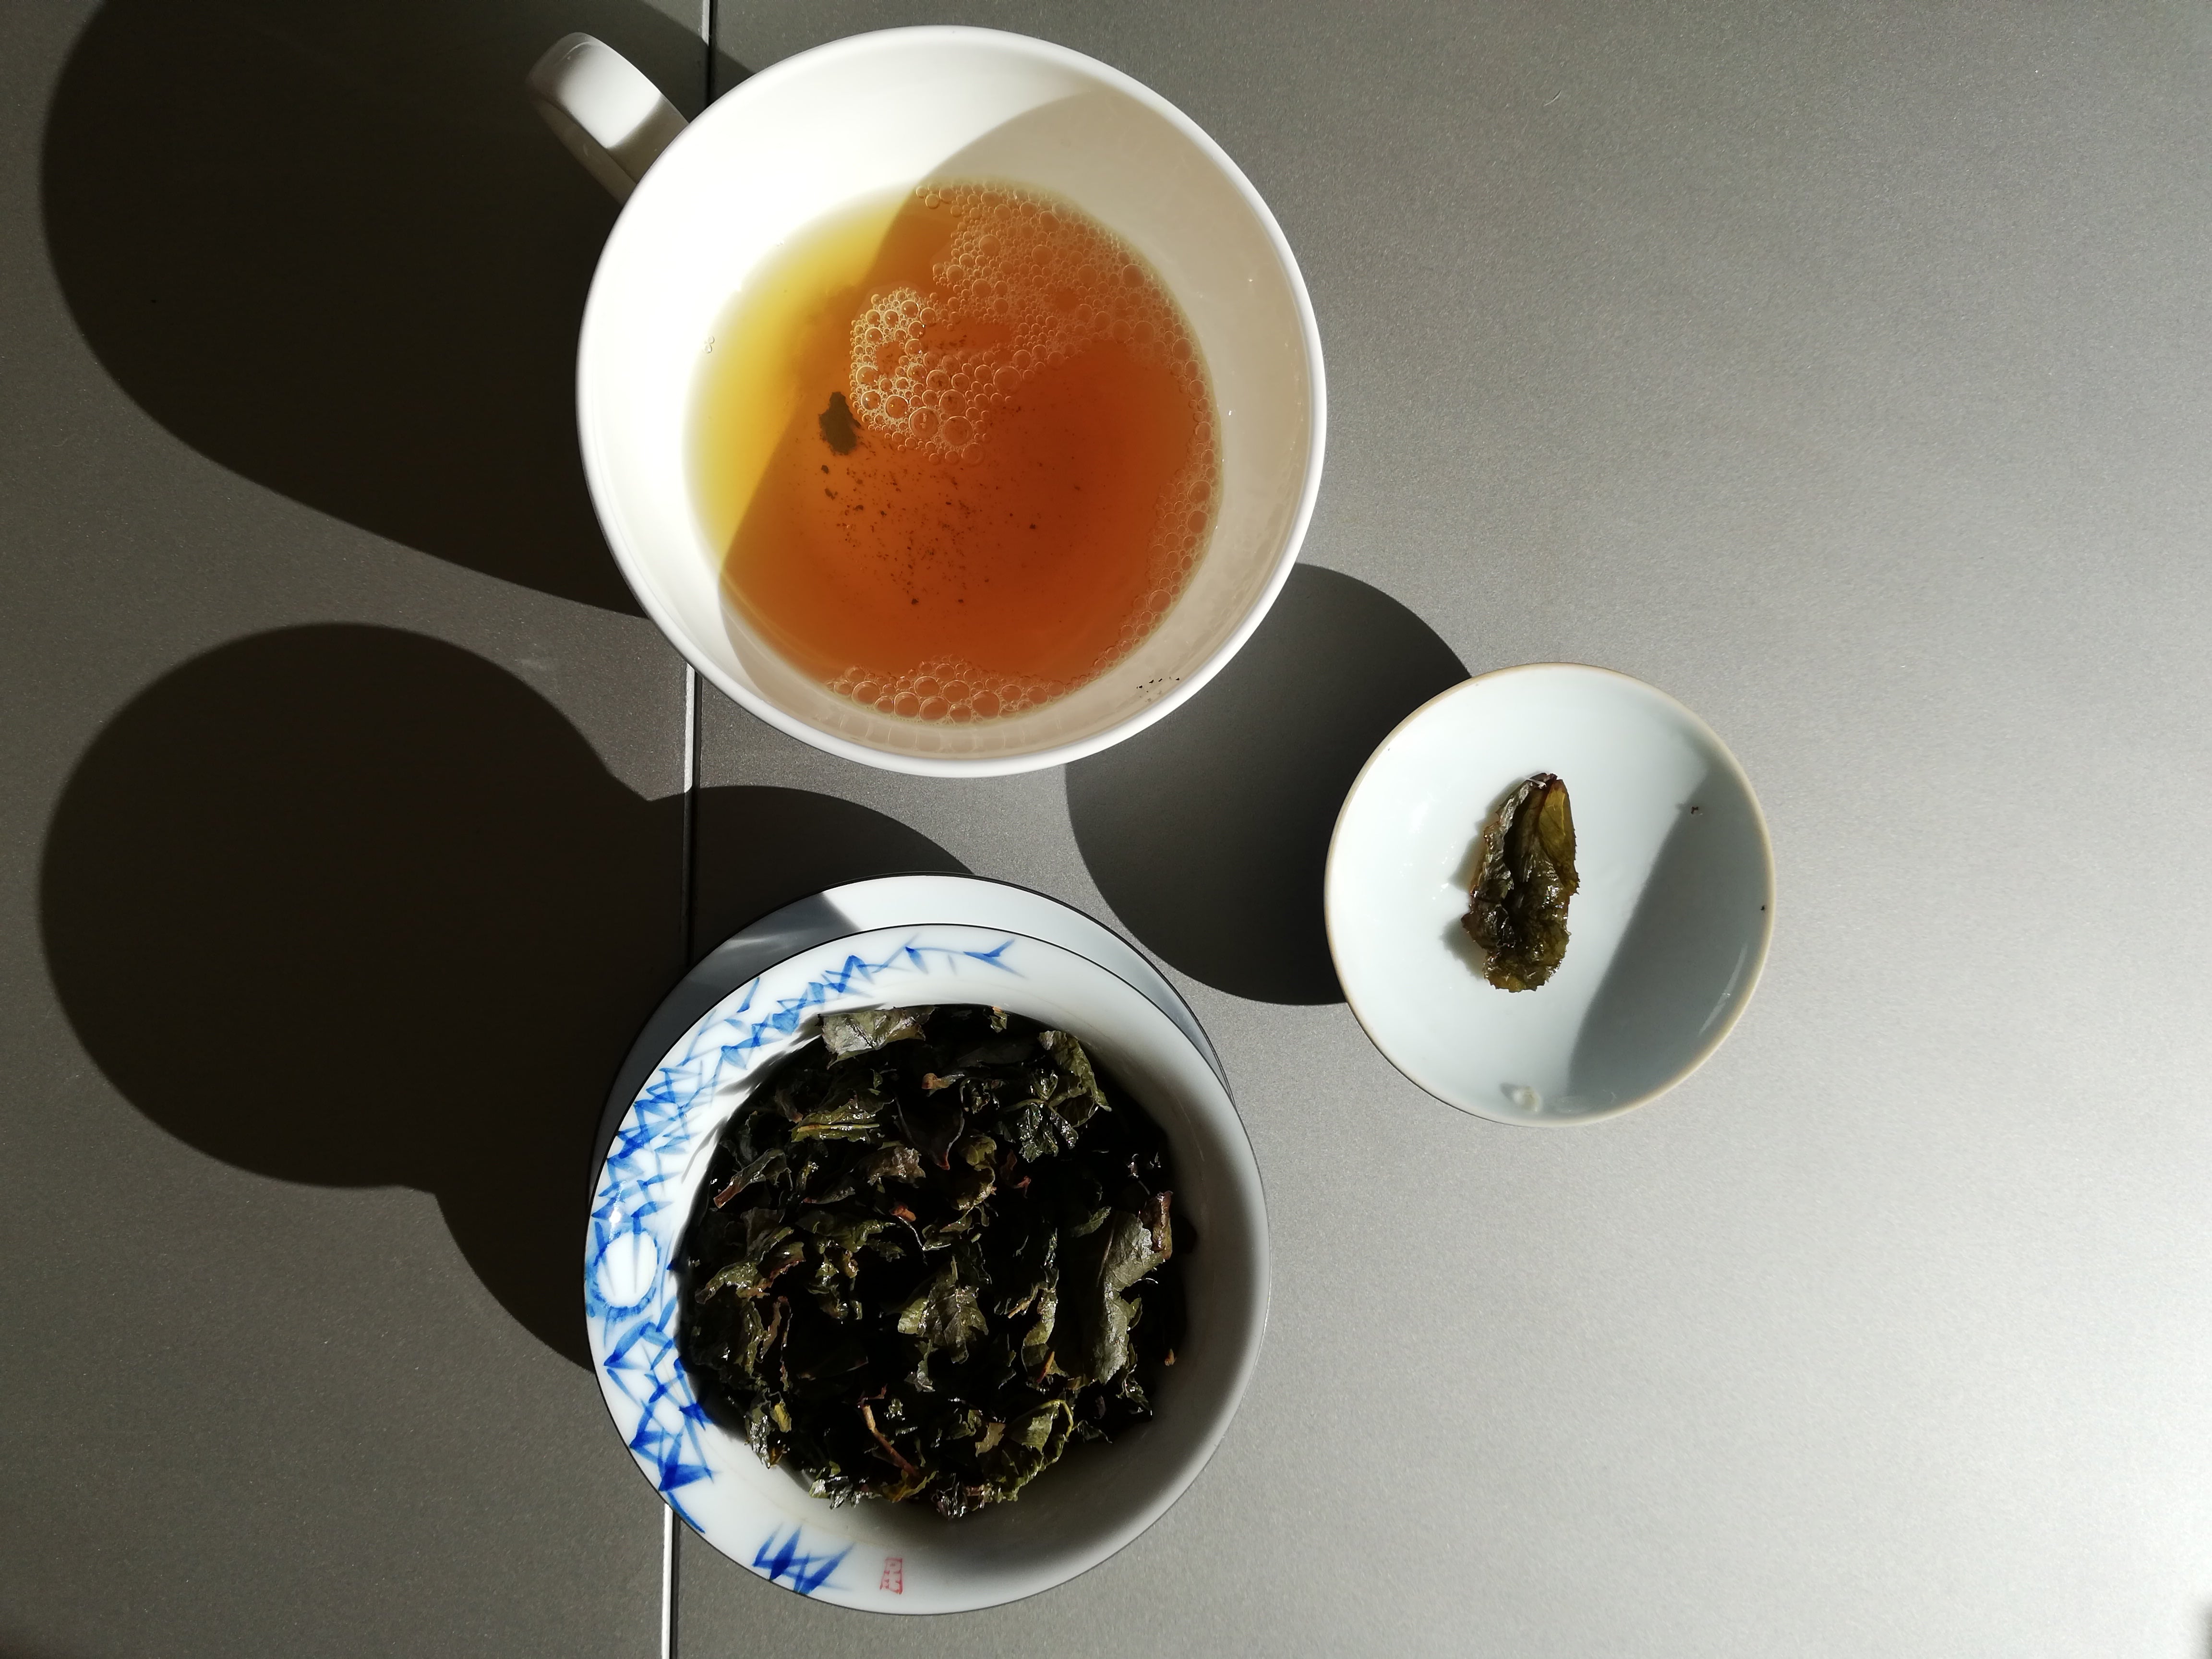 Tie Guan Yin Oolong Loose Leaf Tea - Iron Goddess of Mercy